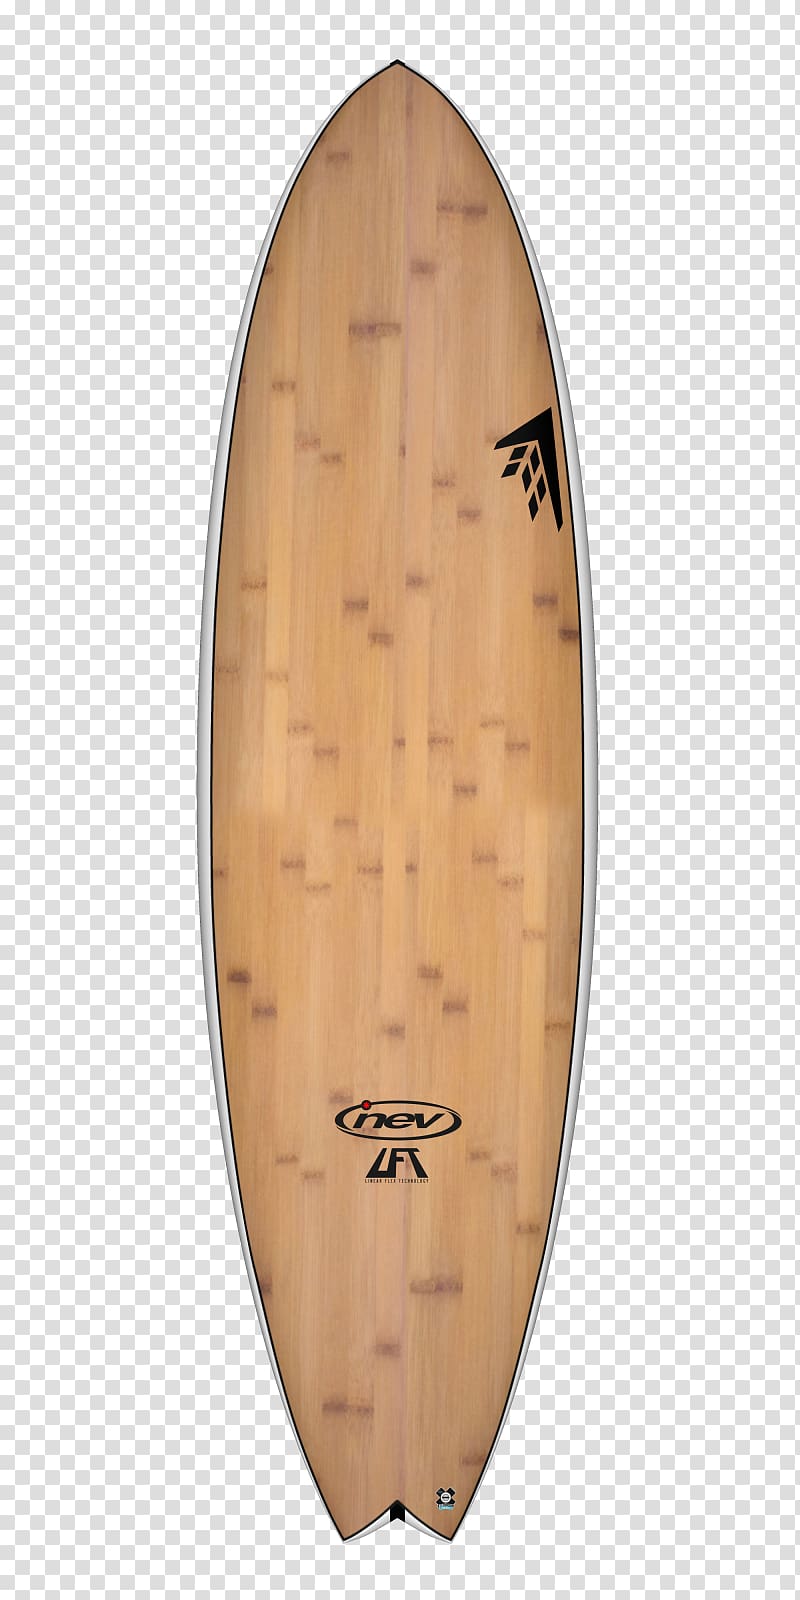 Surfboard Surfing Wicks Surf IEEE 1394 Longboard, surf board transparent background PNG clipart